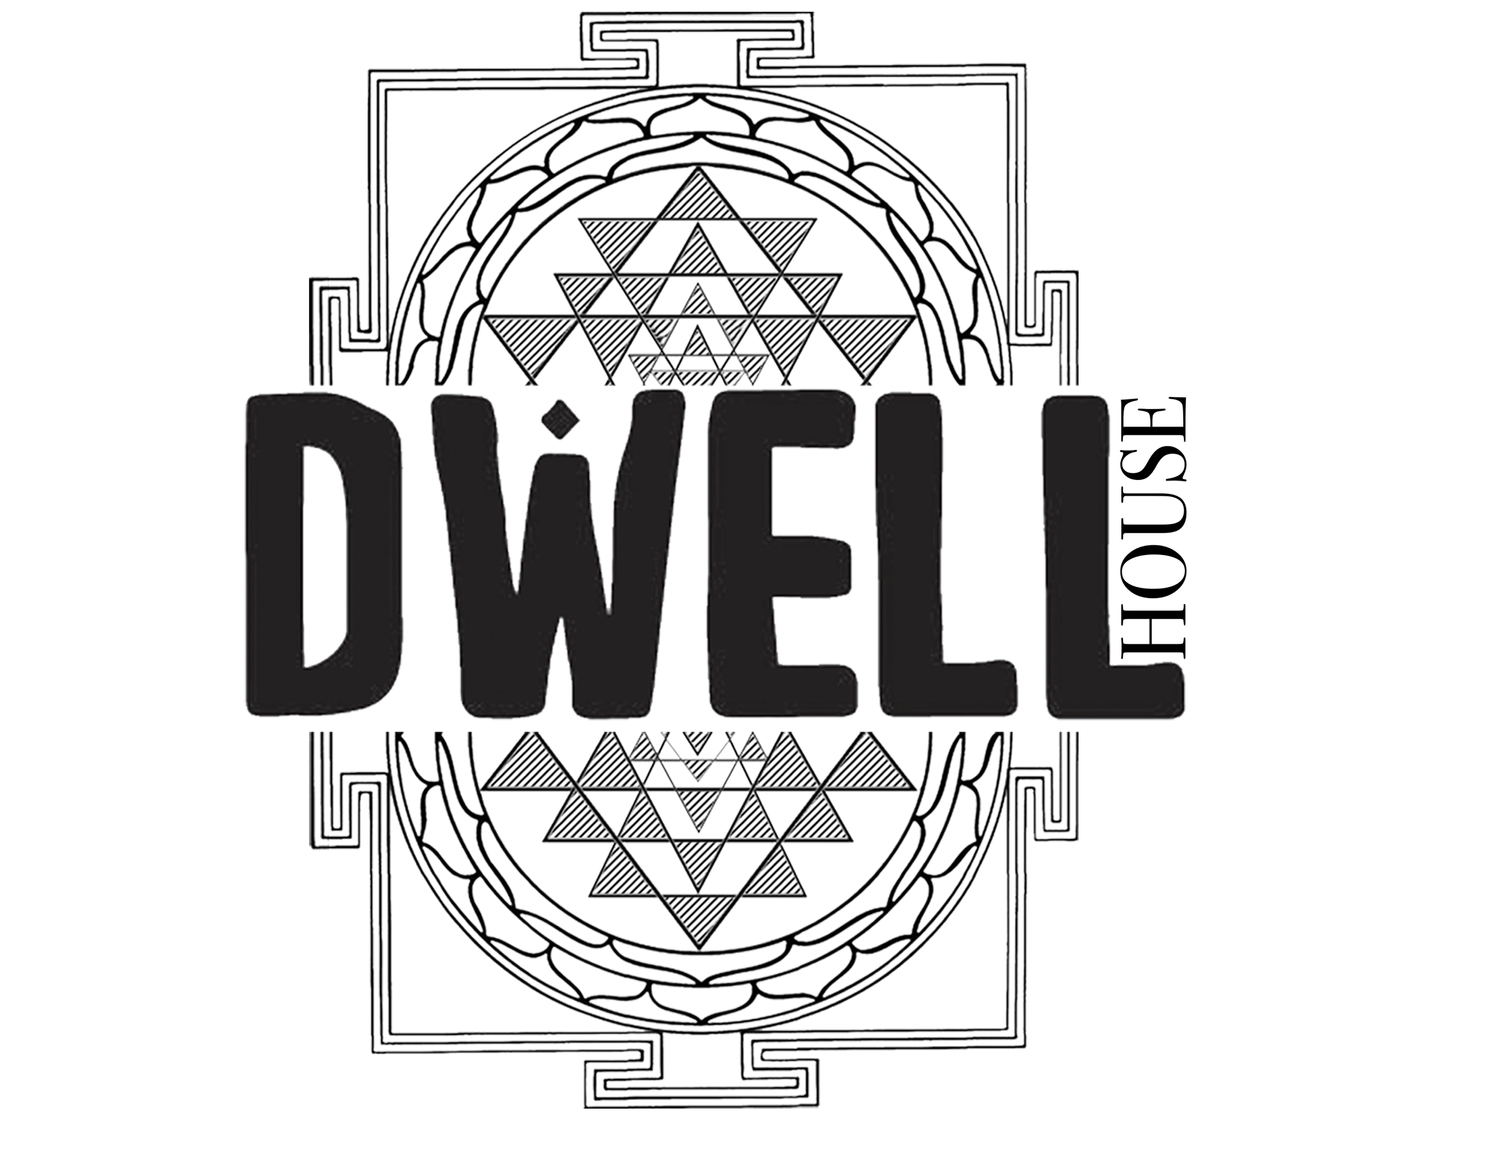 Dwell House